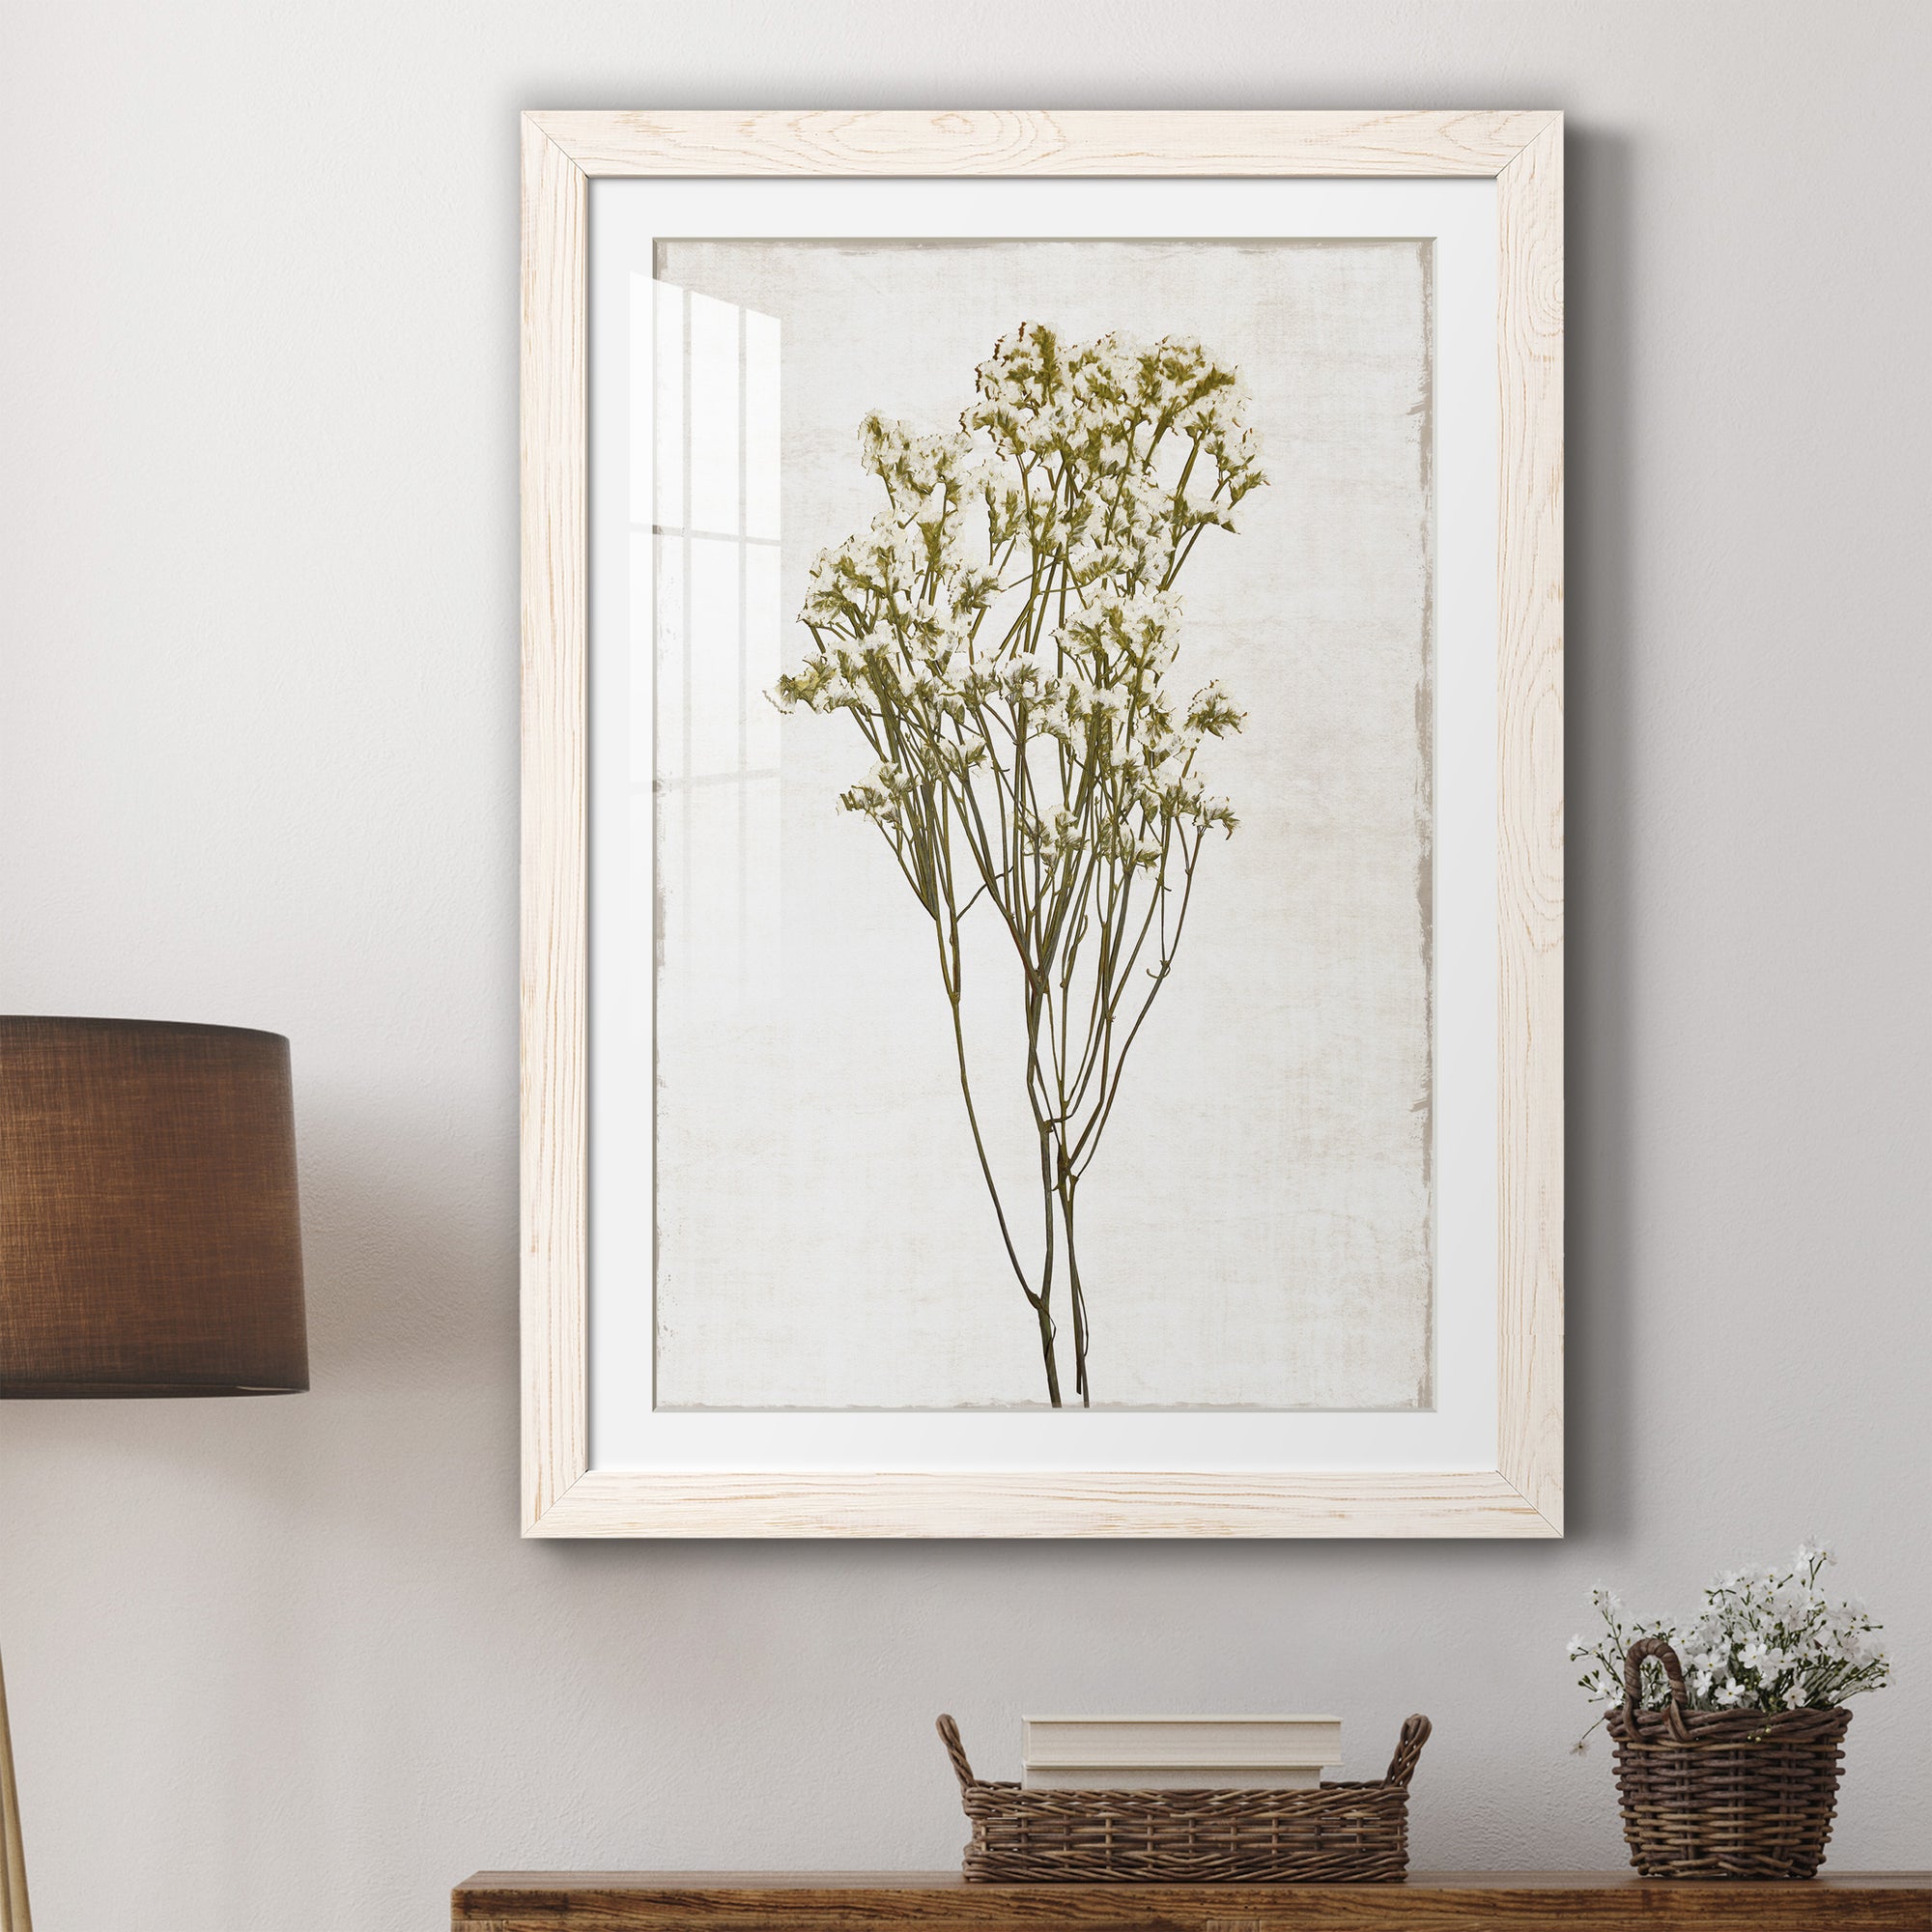 Farmhouse Pressed Flower II - Premium Framed Print - Distressed Barnwood Frame - Ready to Hang